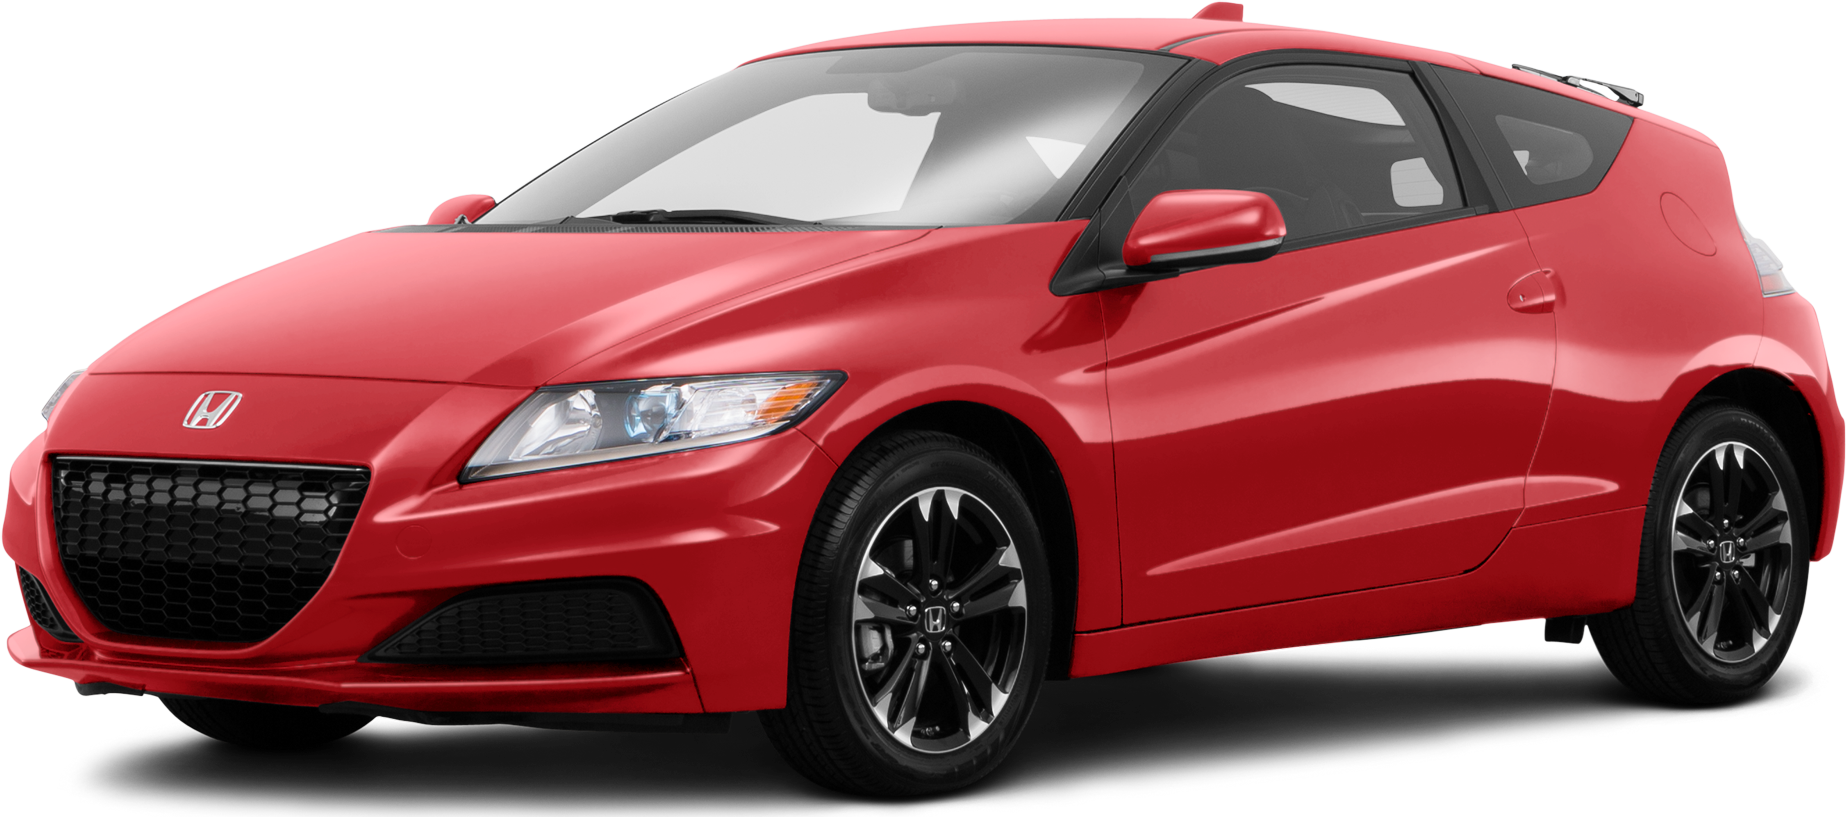 Used Honda CR-Z Hatchback (2010 - 2013) Review